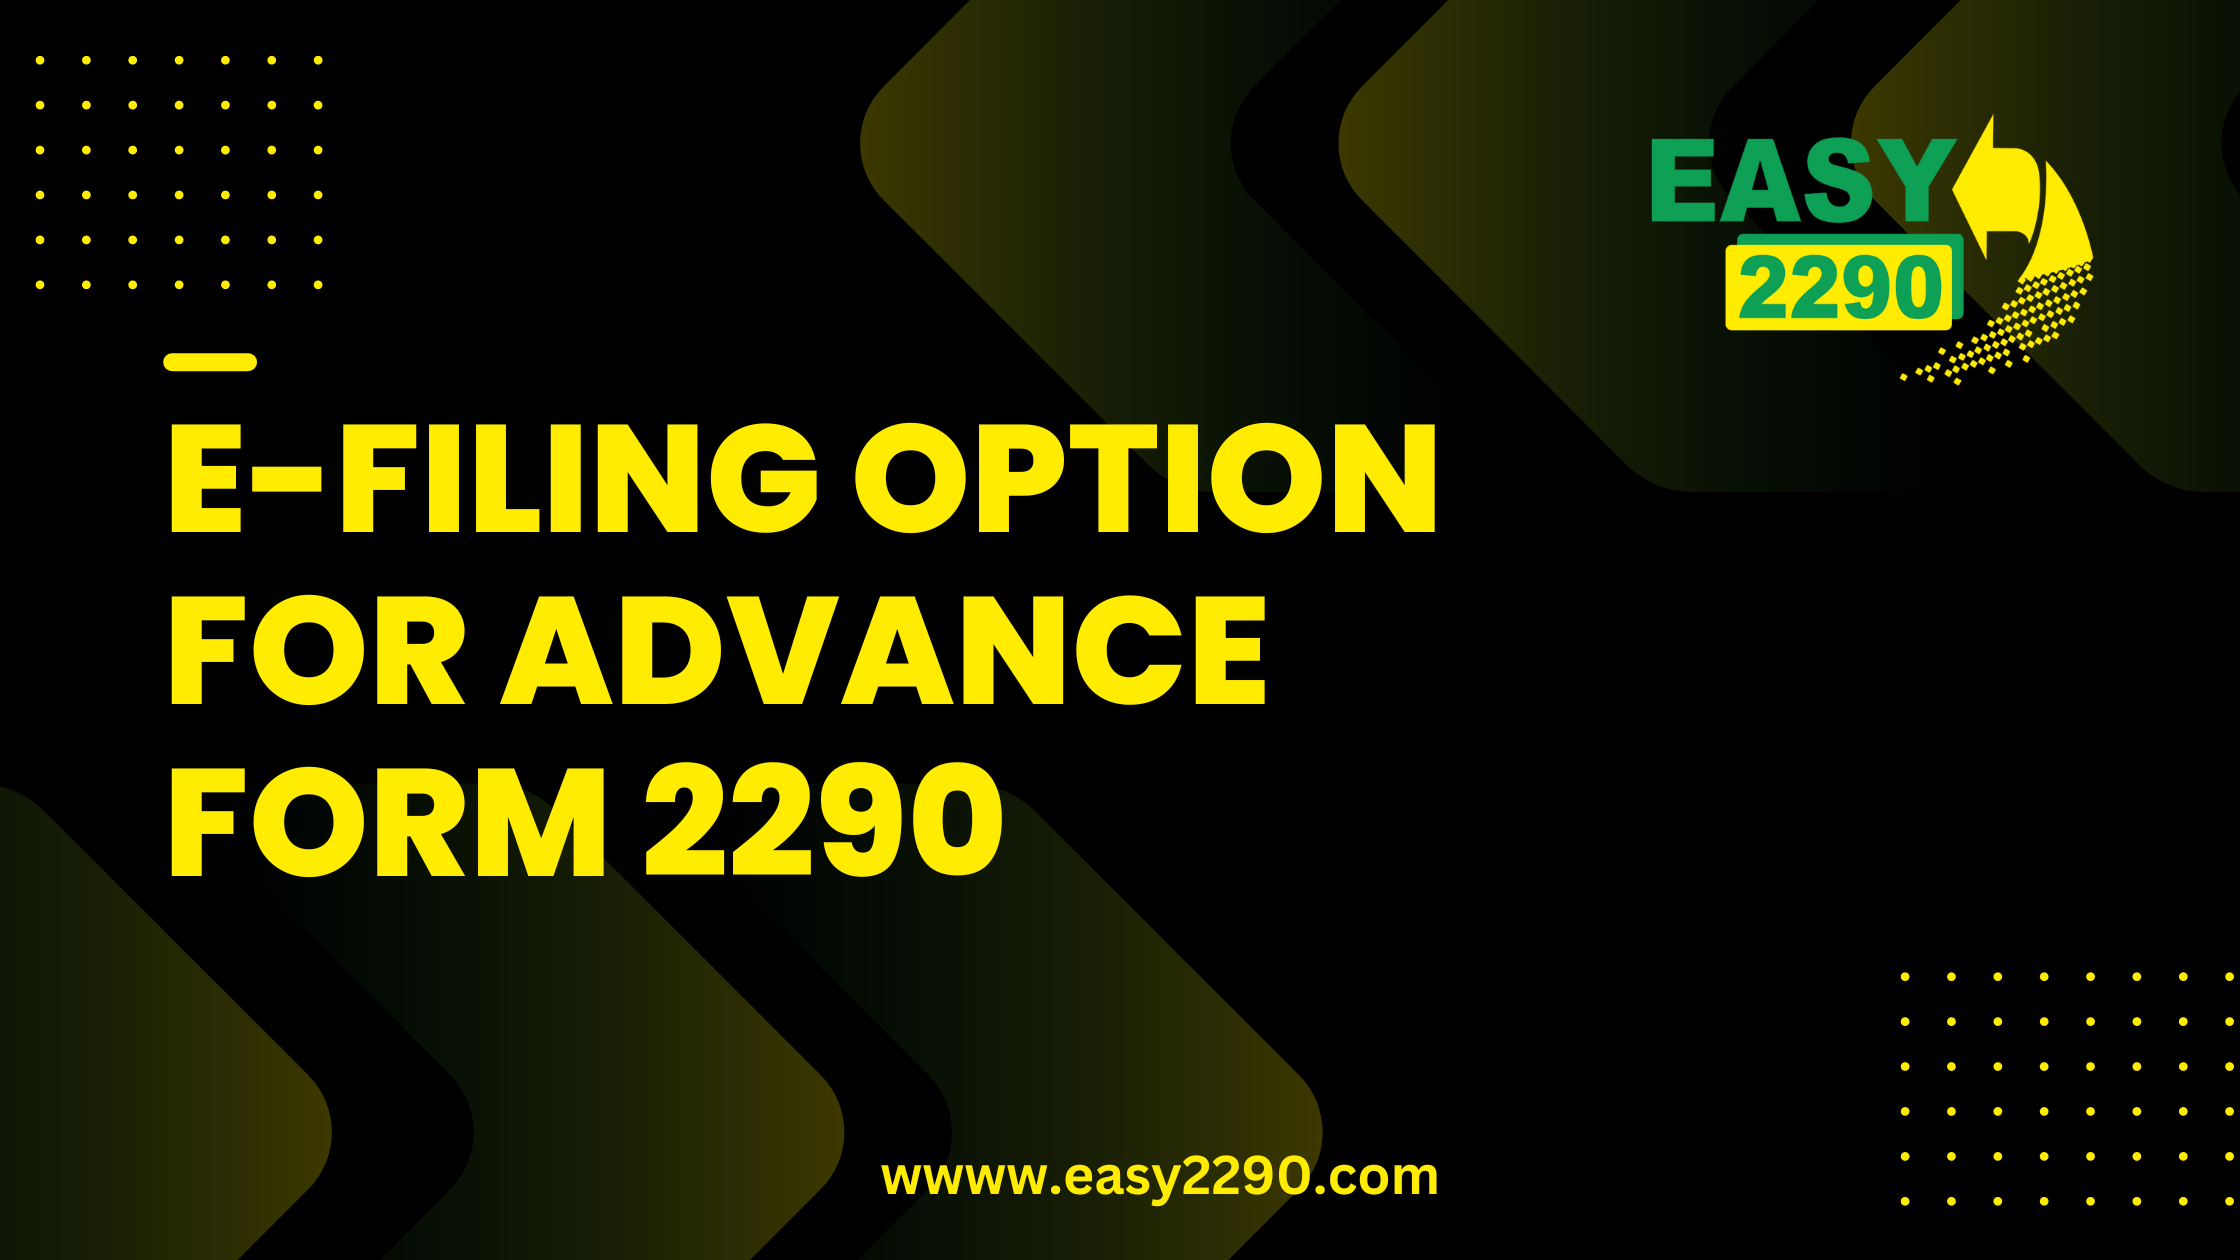 E-filing option for Advance Form 2290